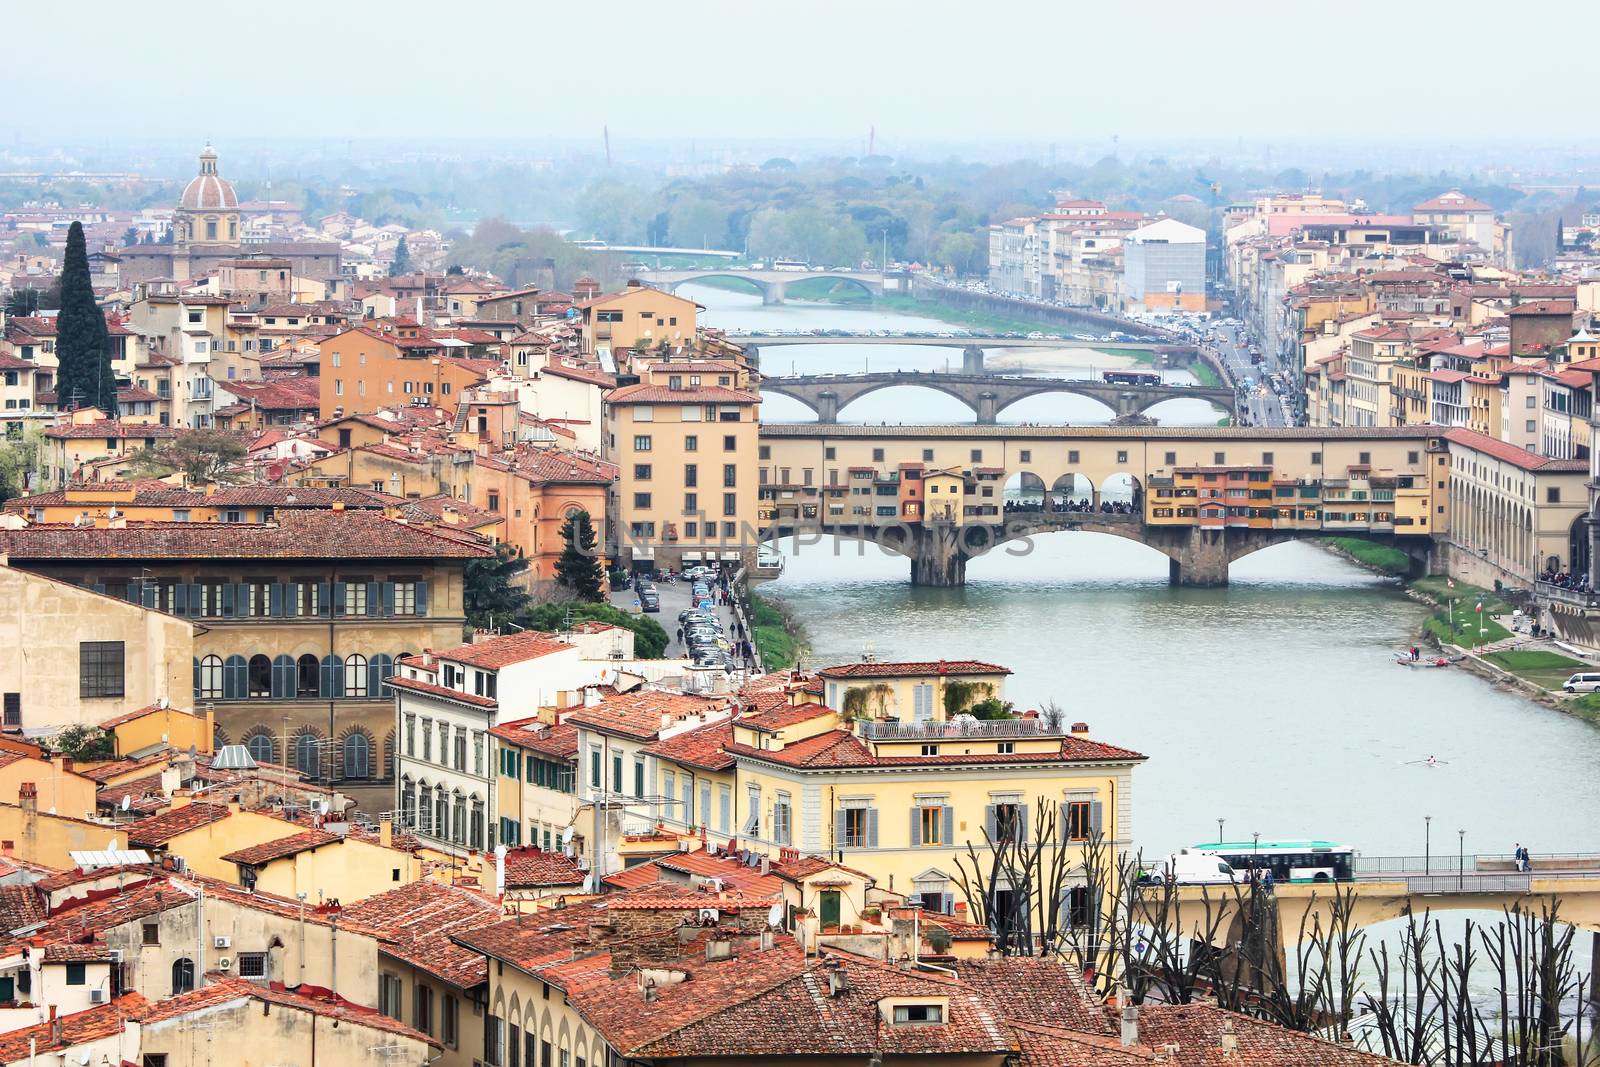 Ponte Vecchio in Florence, Italy by Brigida_Soriano